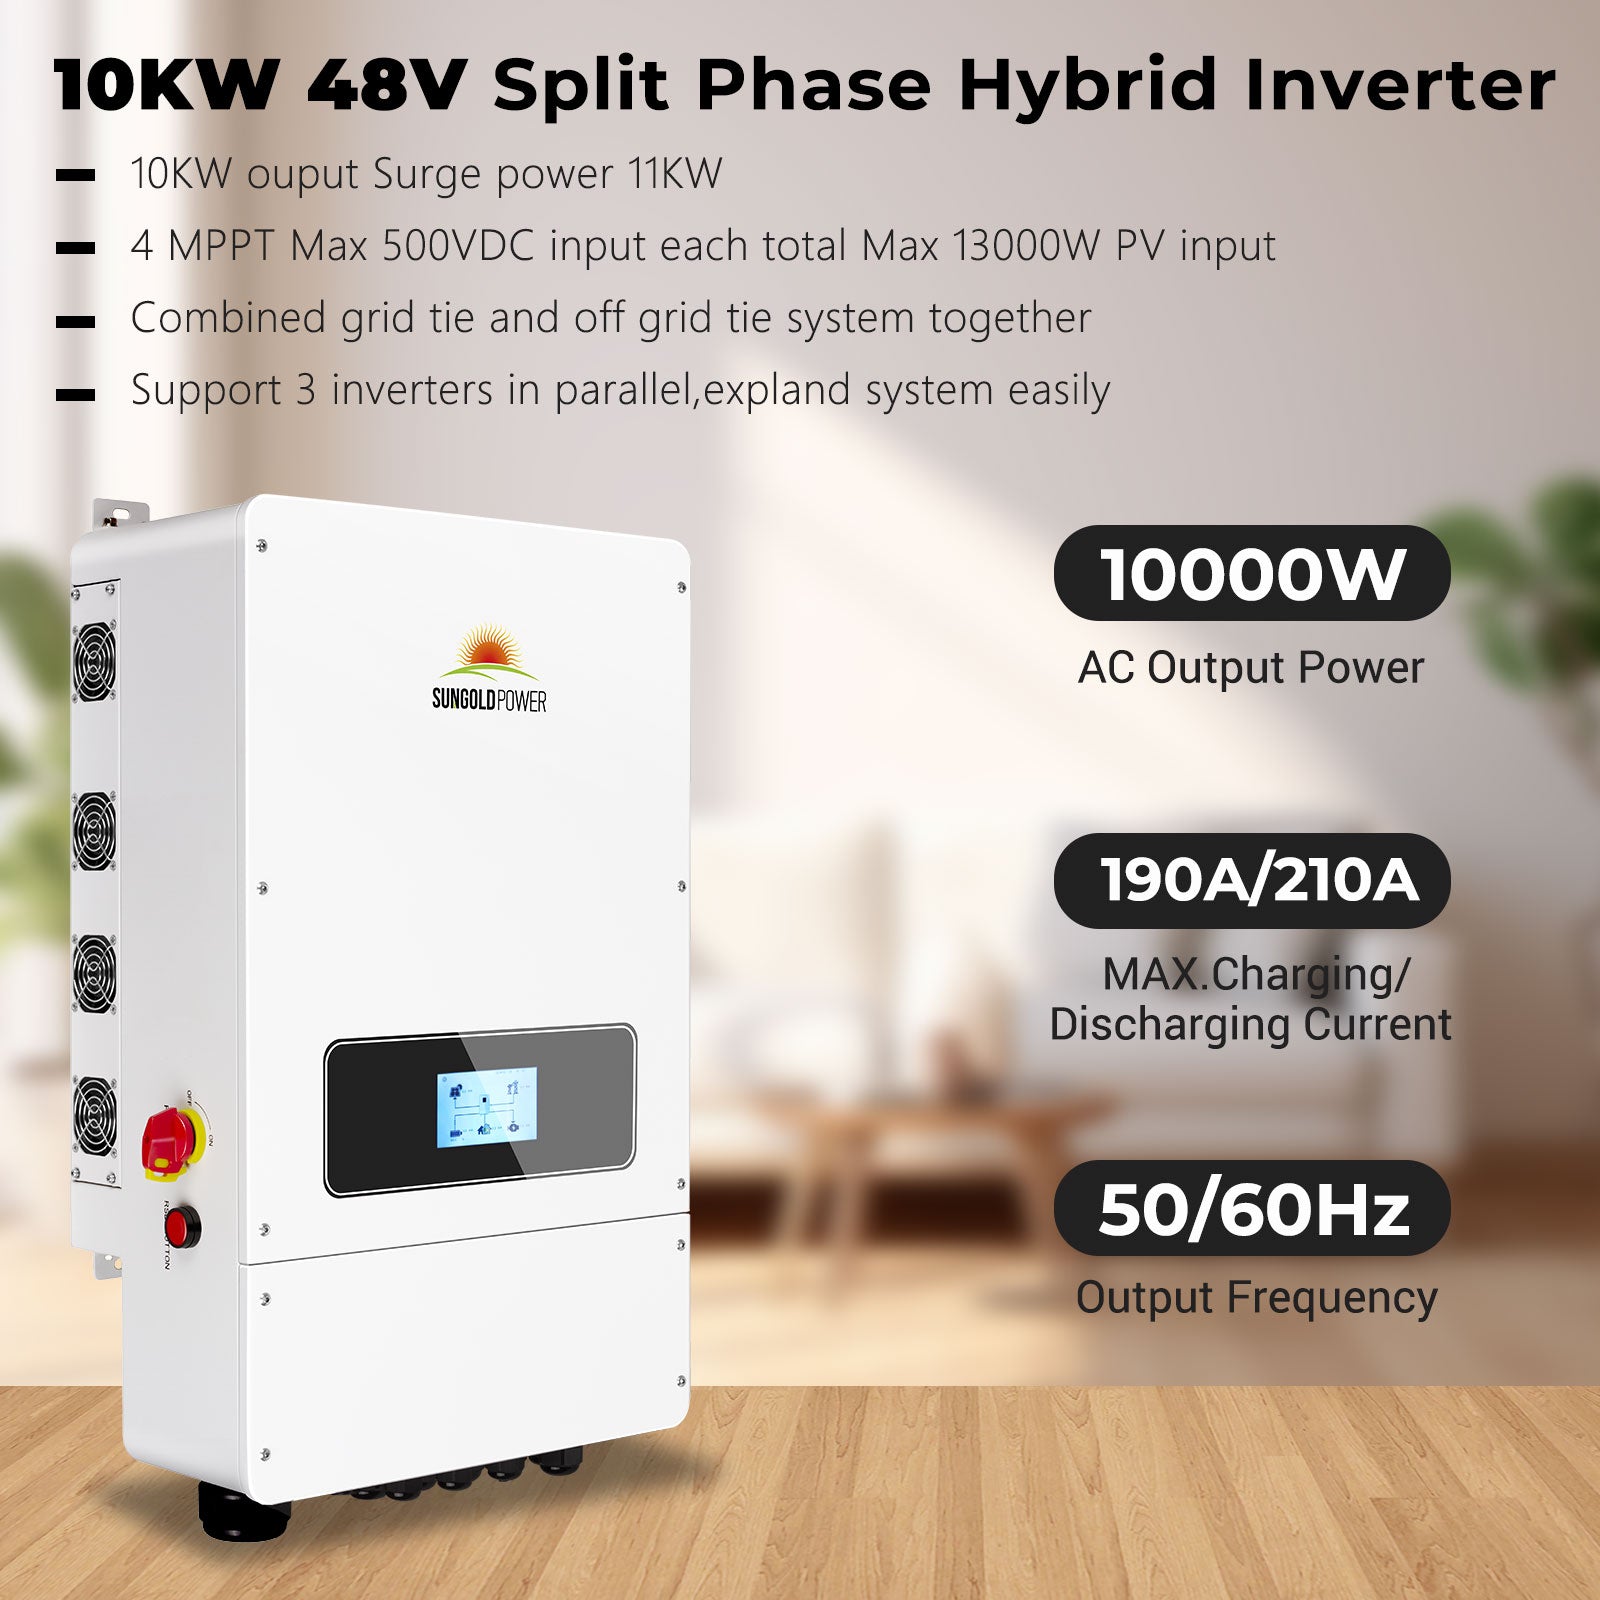 10KW Hybrid Inverter 48V Split Phase